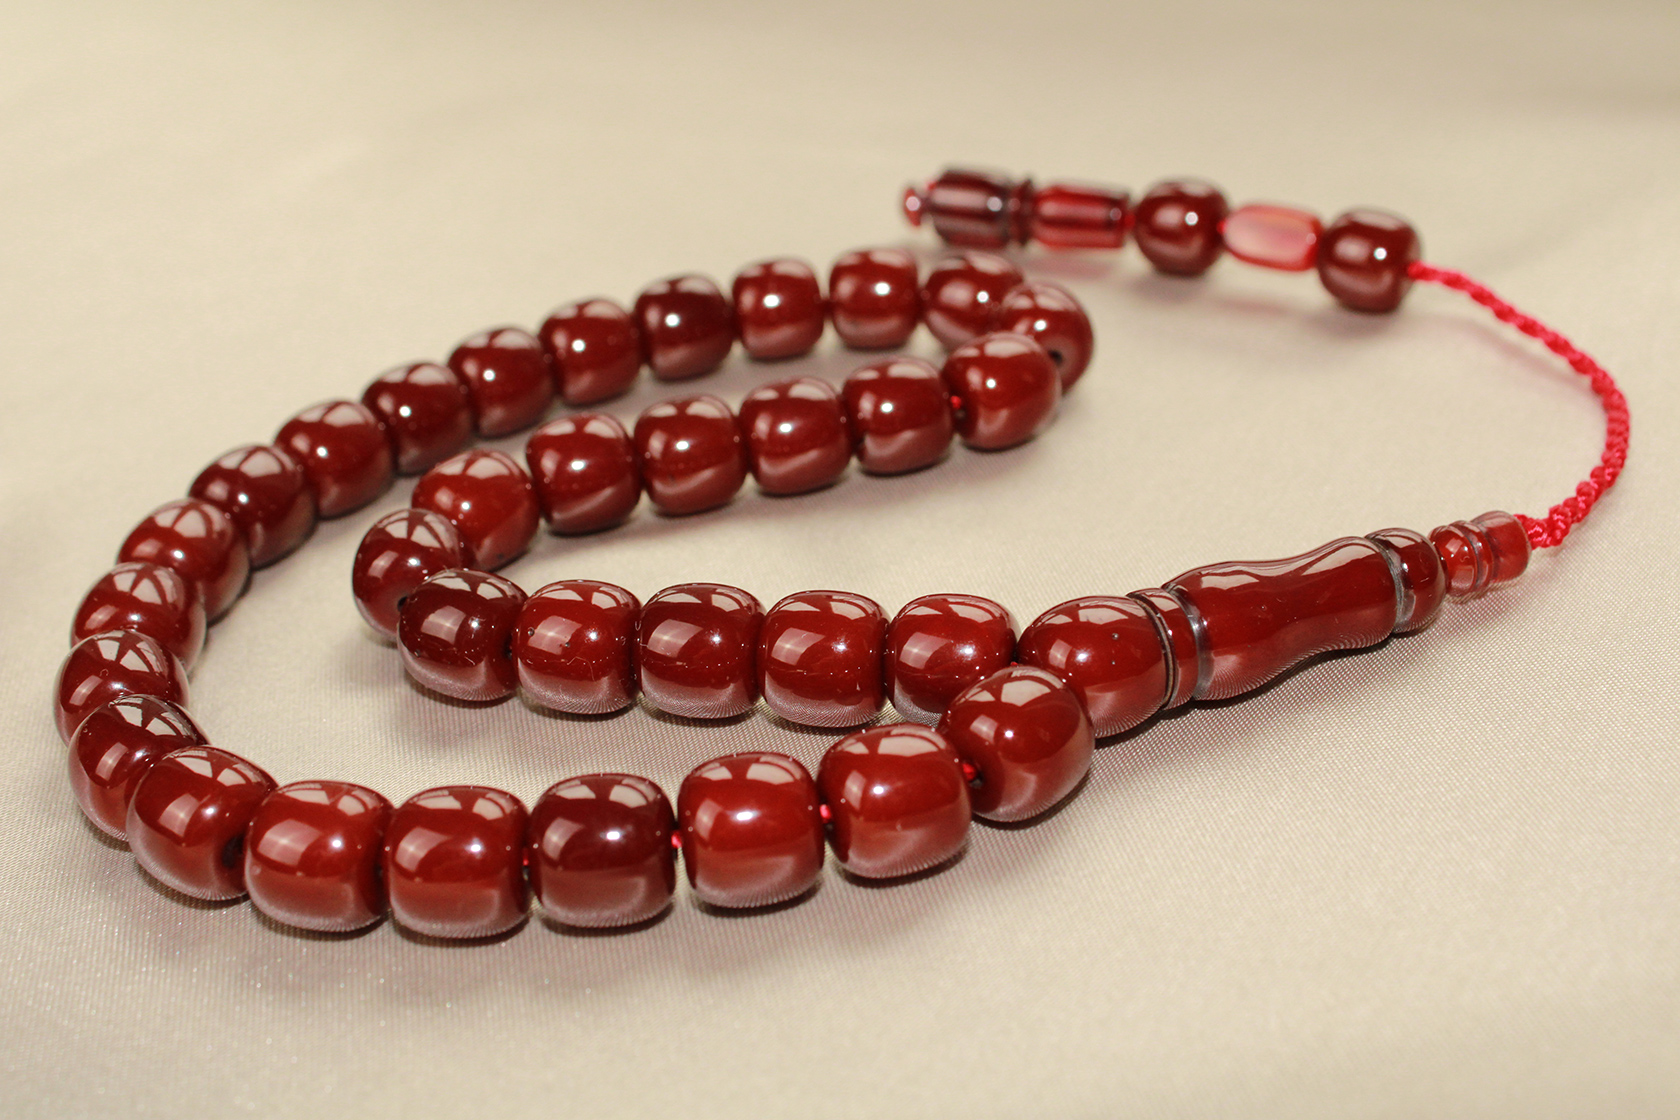 Antique Ottoman Cherry Amber Prayer Bead